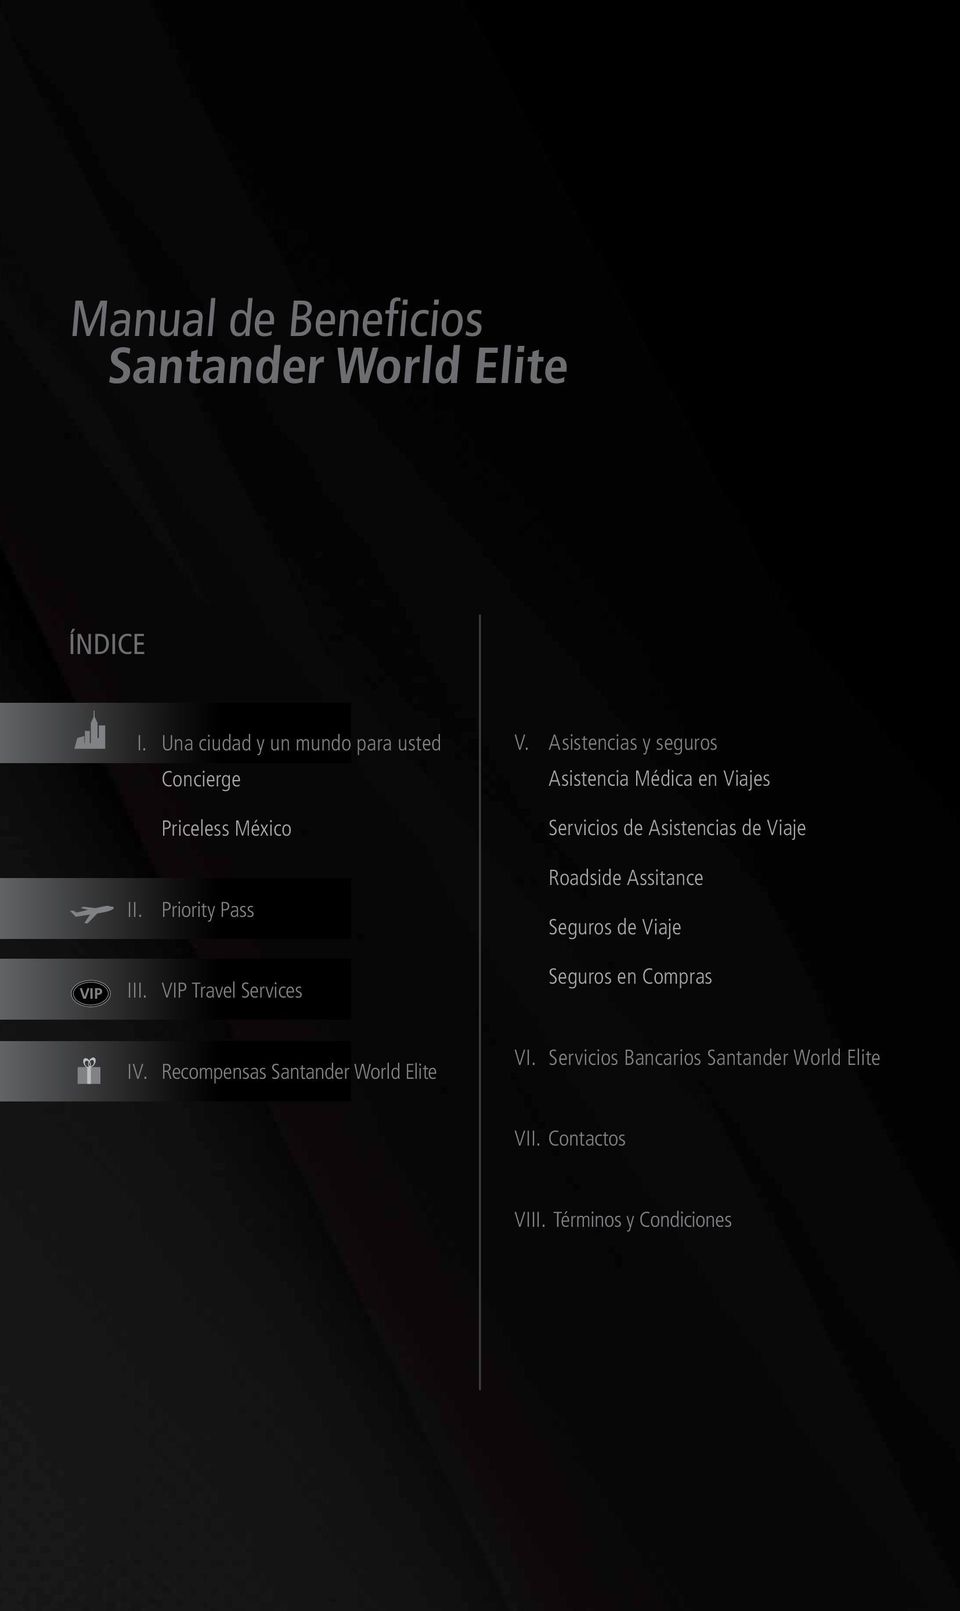 Recompensas Santander World Elite V.